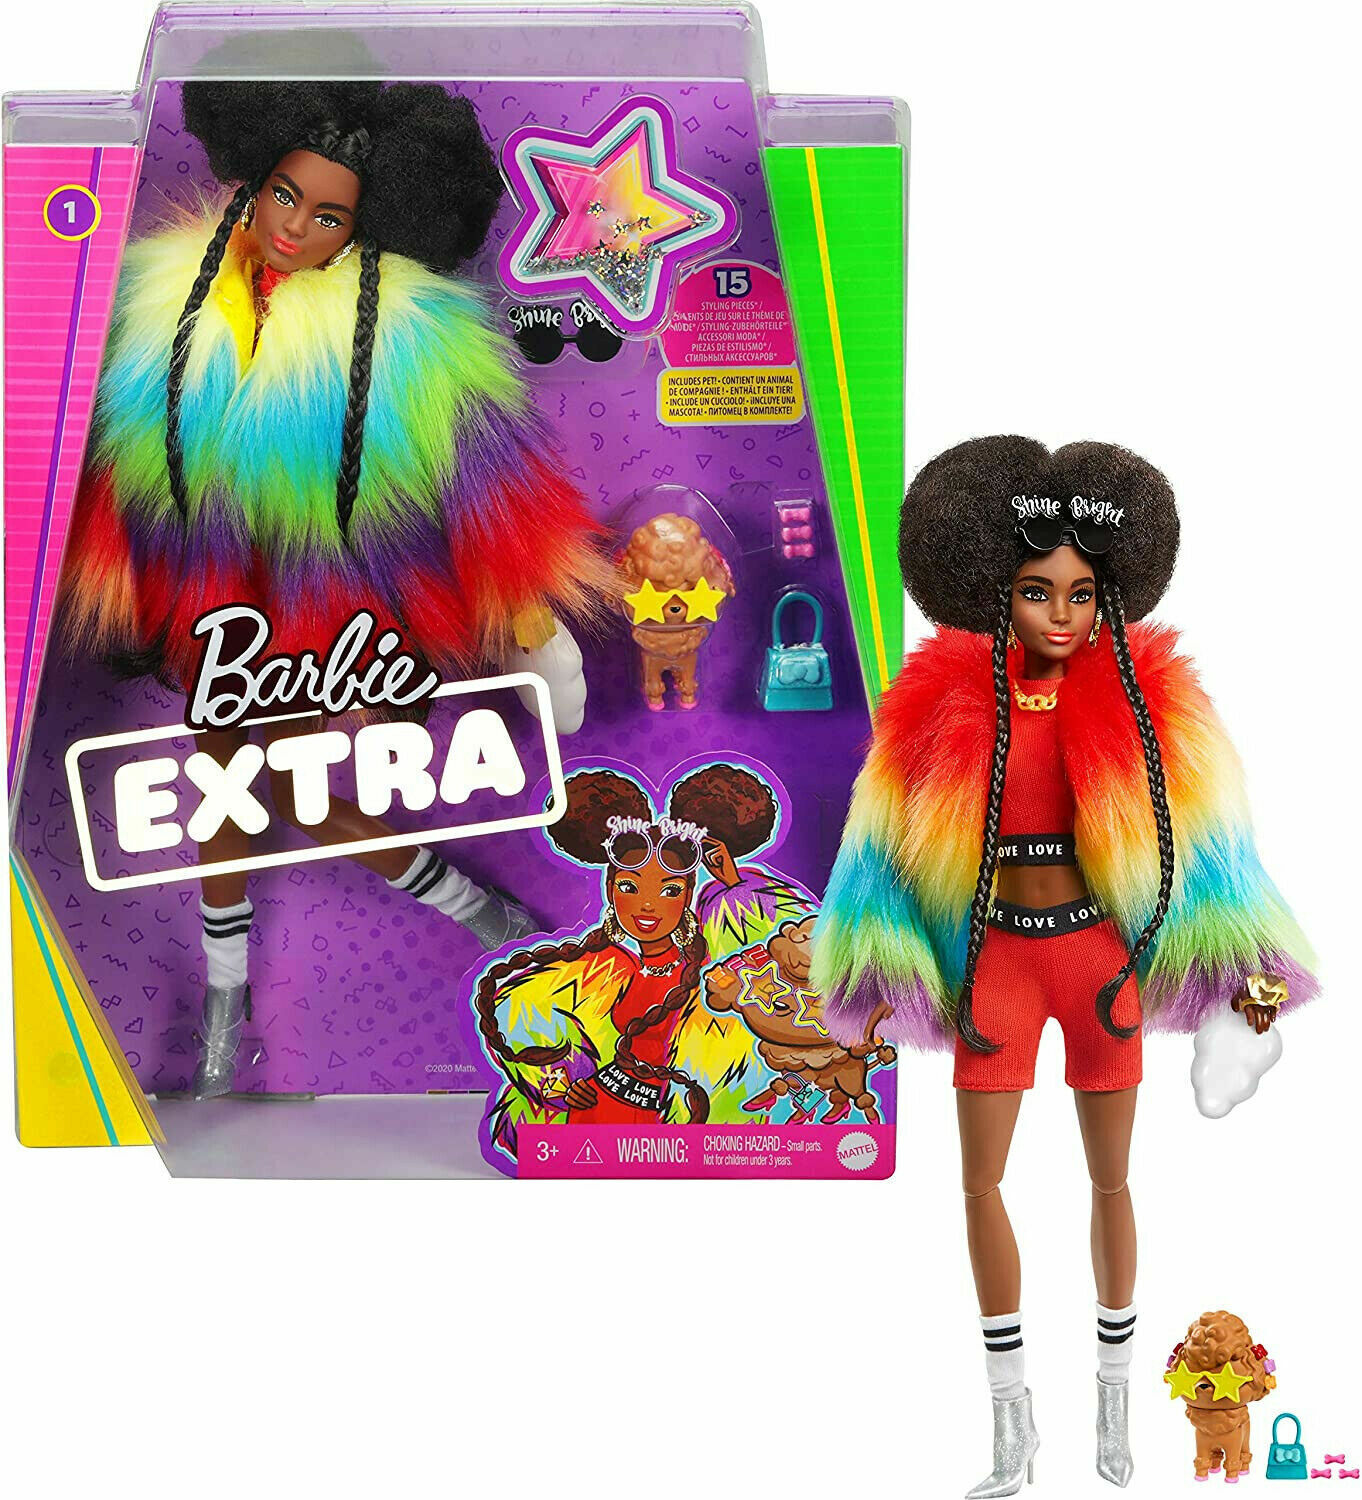 Barbie Extra Rainbow Coat Doll